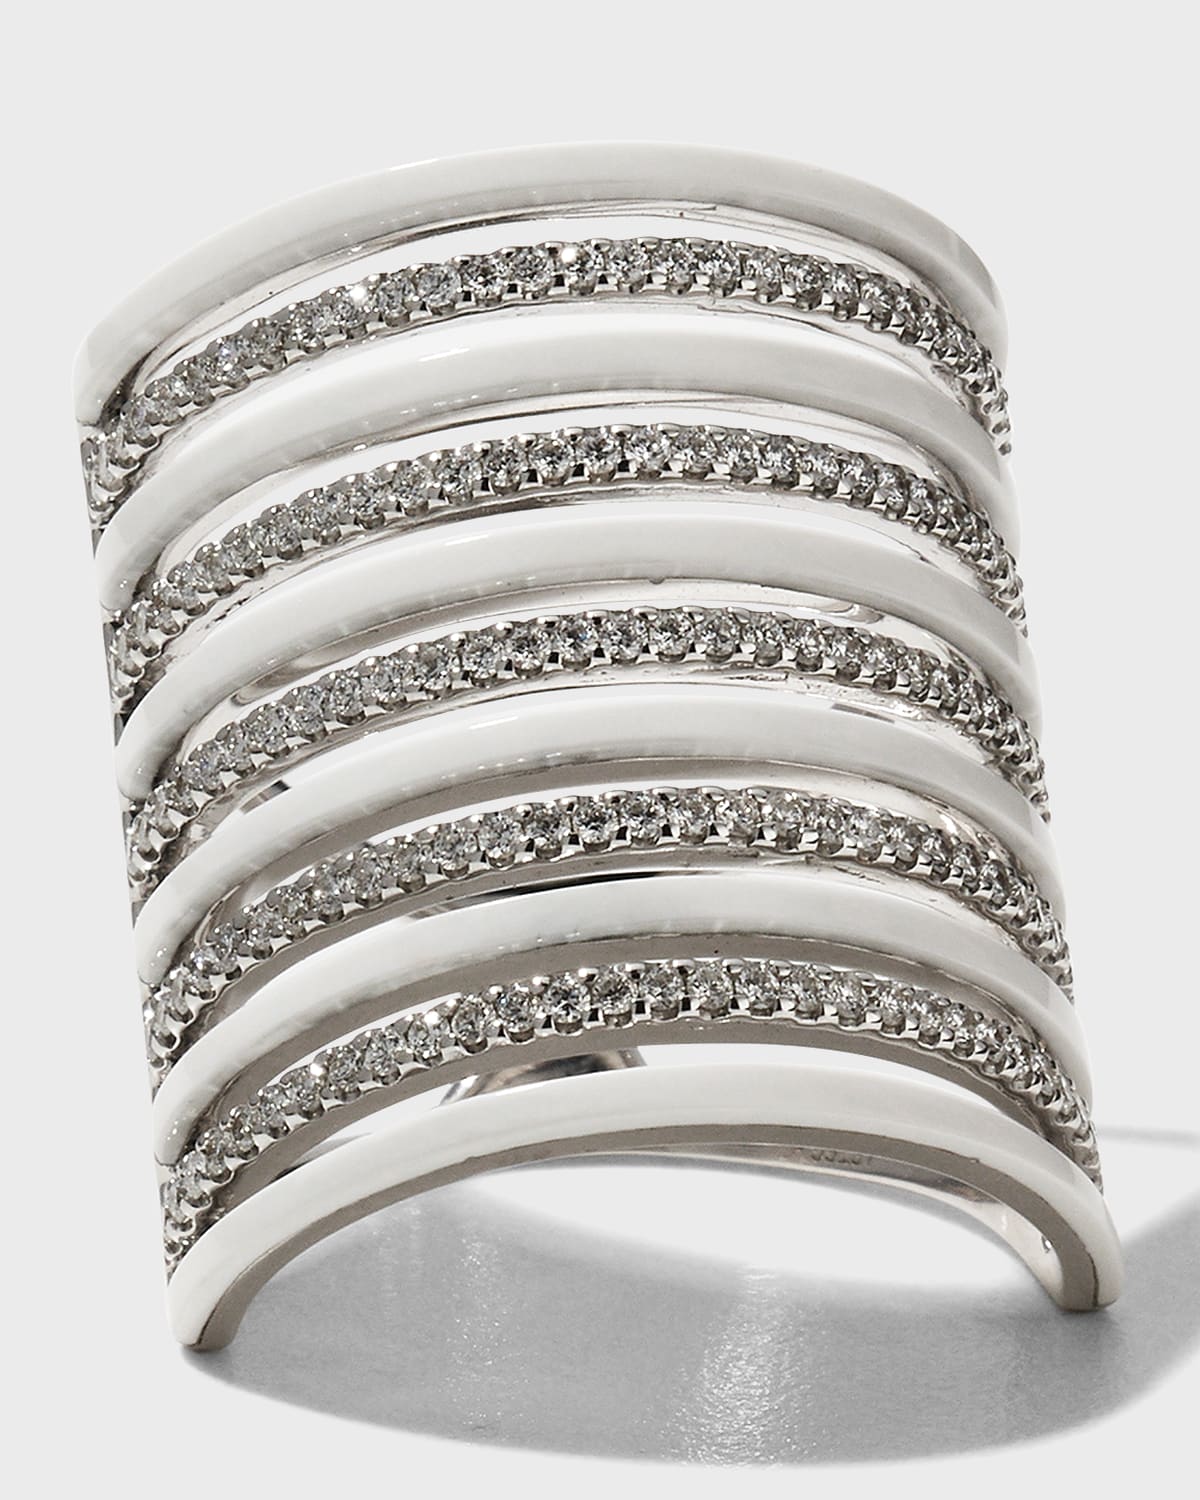 Etho Maria 18k White Gold Diamond and White Ceramic Ring, Size 8